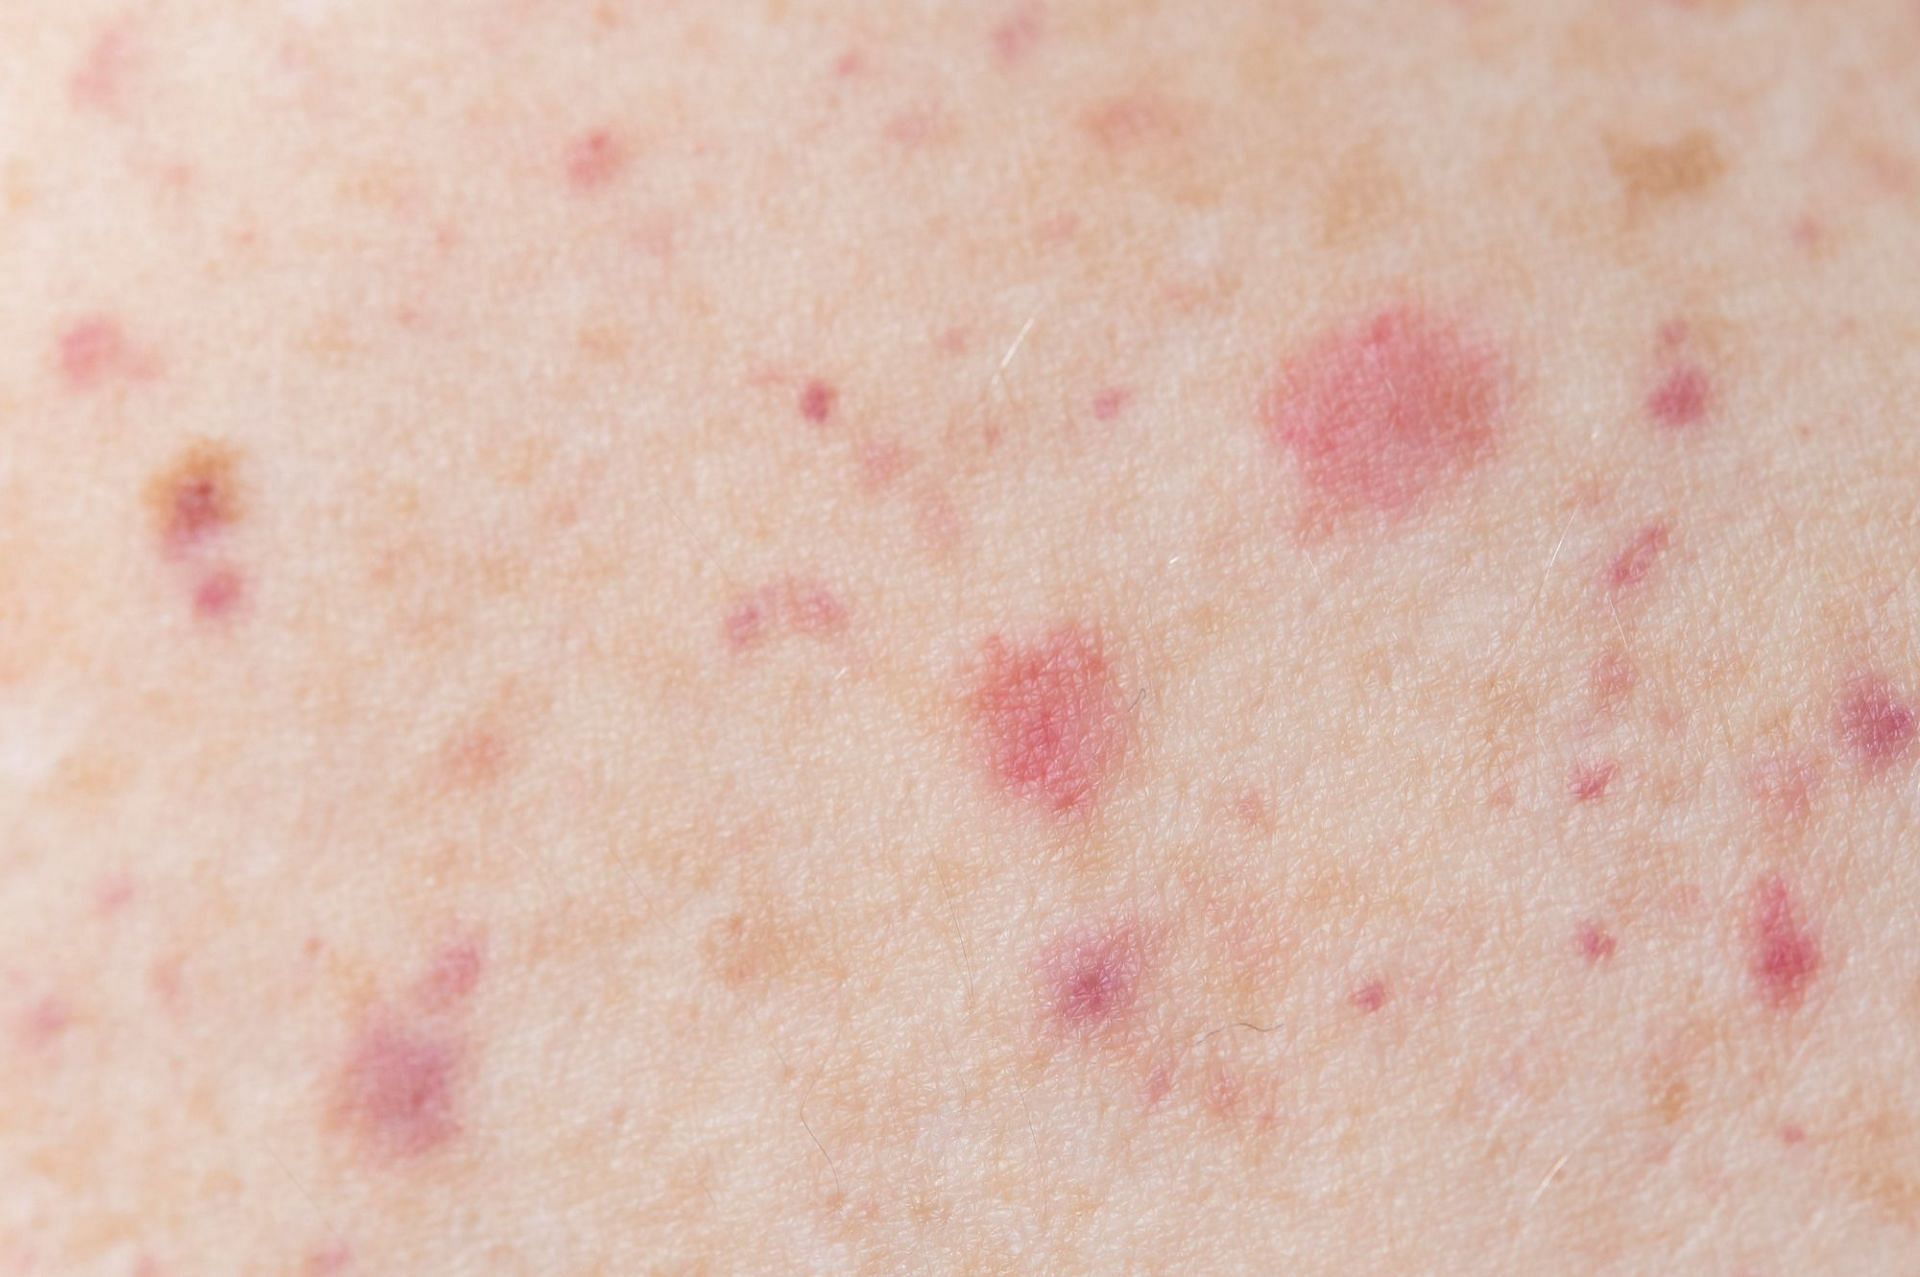 causes of rash purple